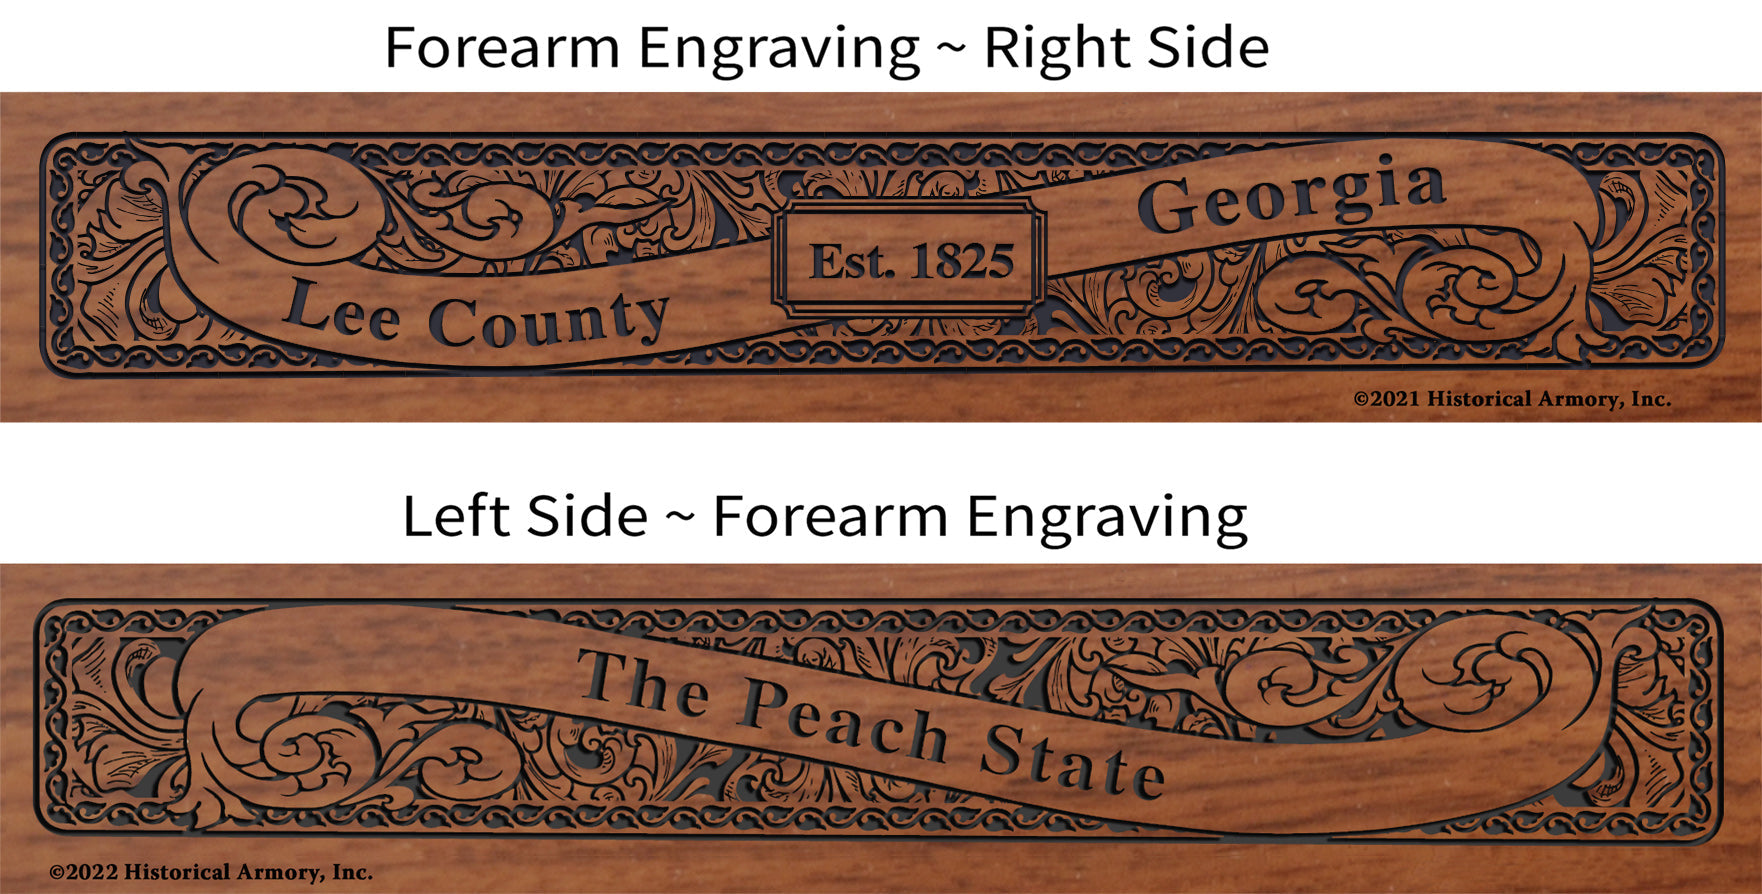 Lee County Georgia Establishment and Motto History Engraved Rifle Forearm